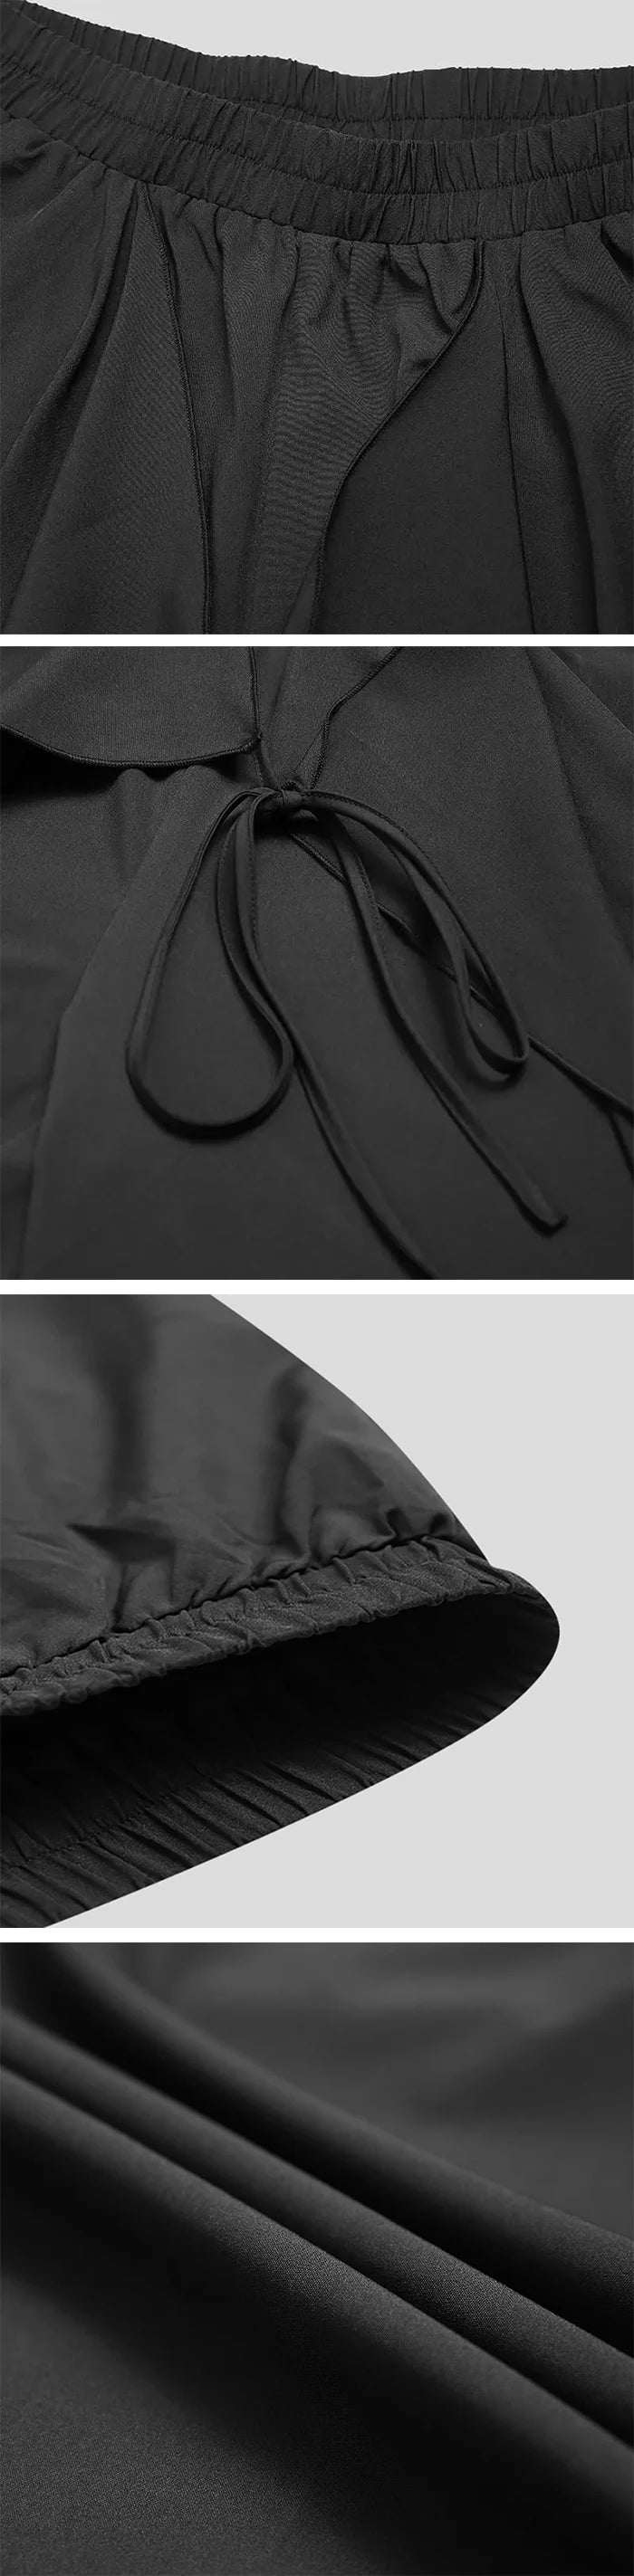 details of the Black pants japanese "Dazaifu"